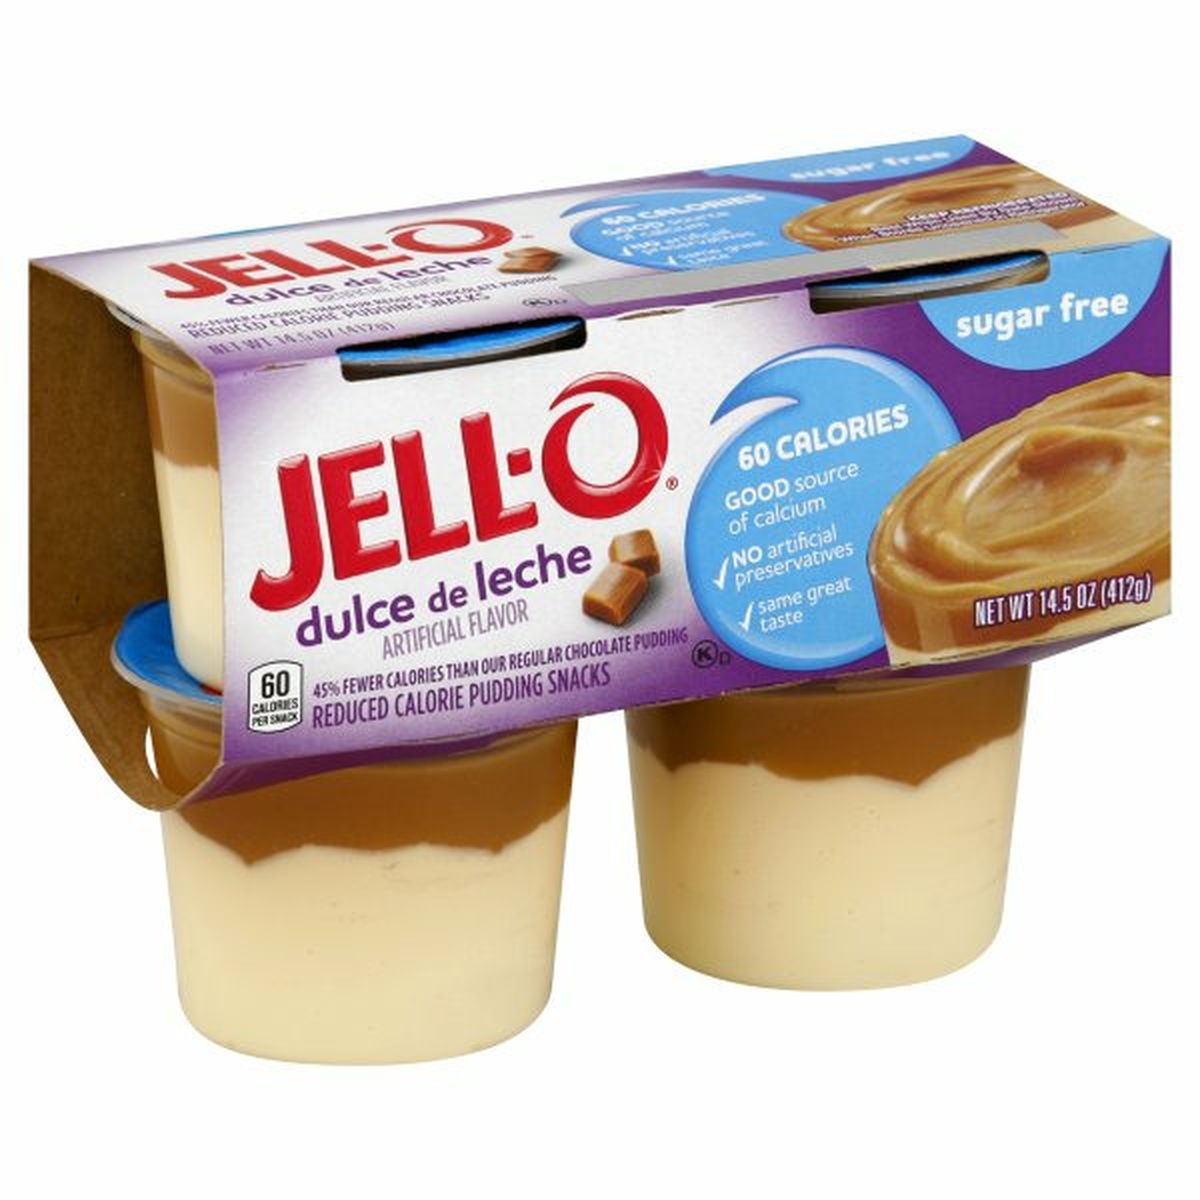 Calories in Jell-O Pudding Snacks, Reduced Calorie, Sugar Free, Dulce de Leche